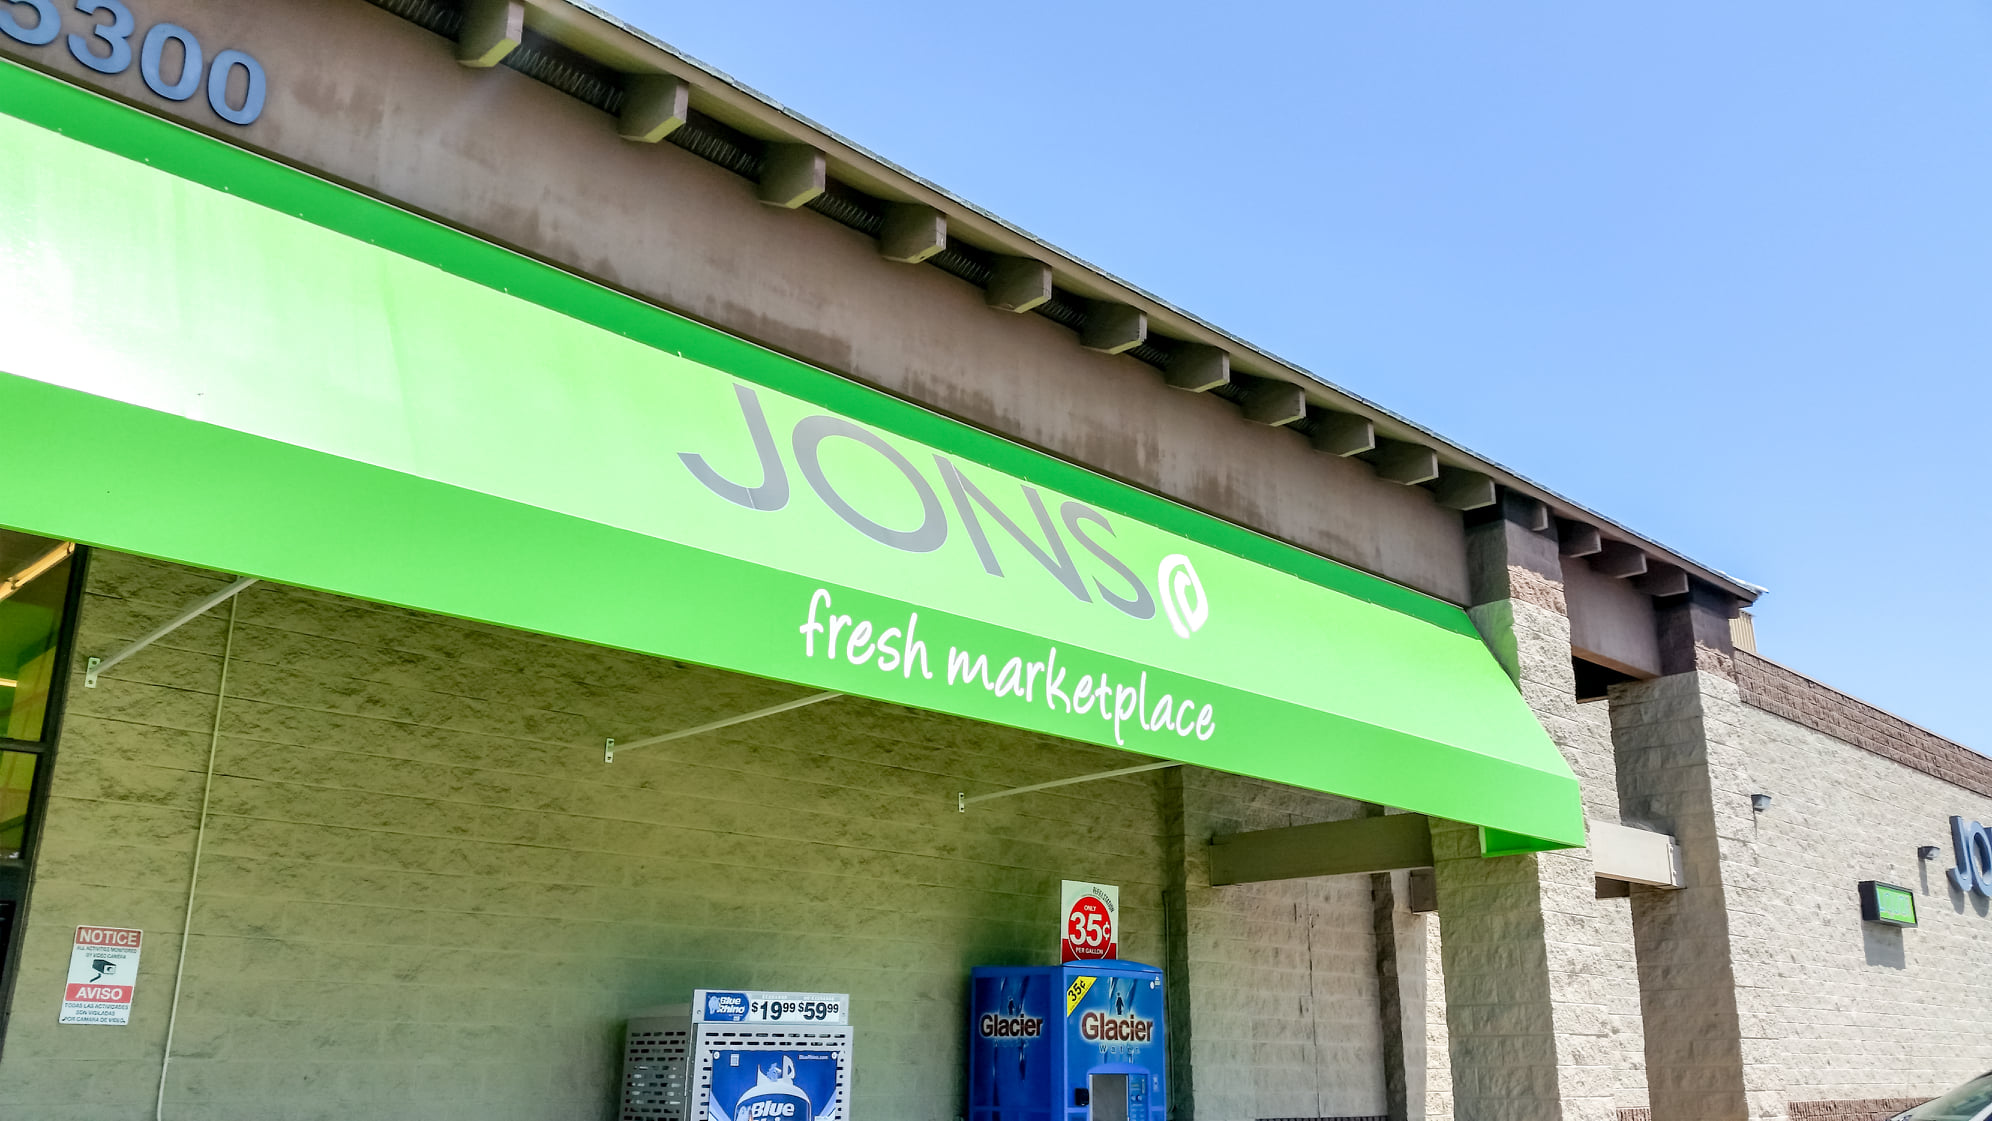 Jons International Market Store